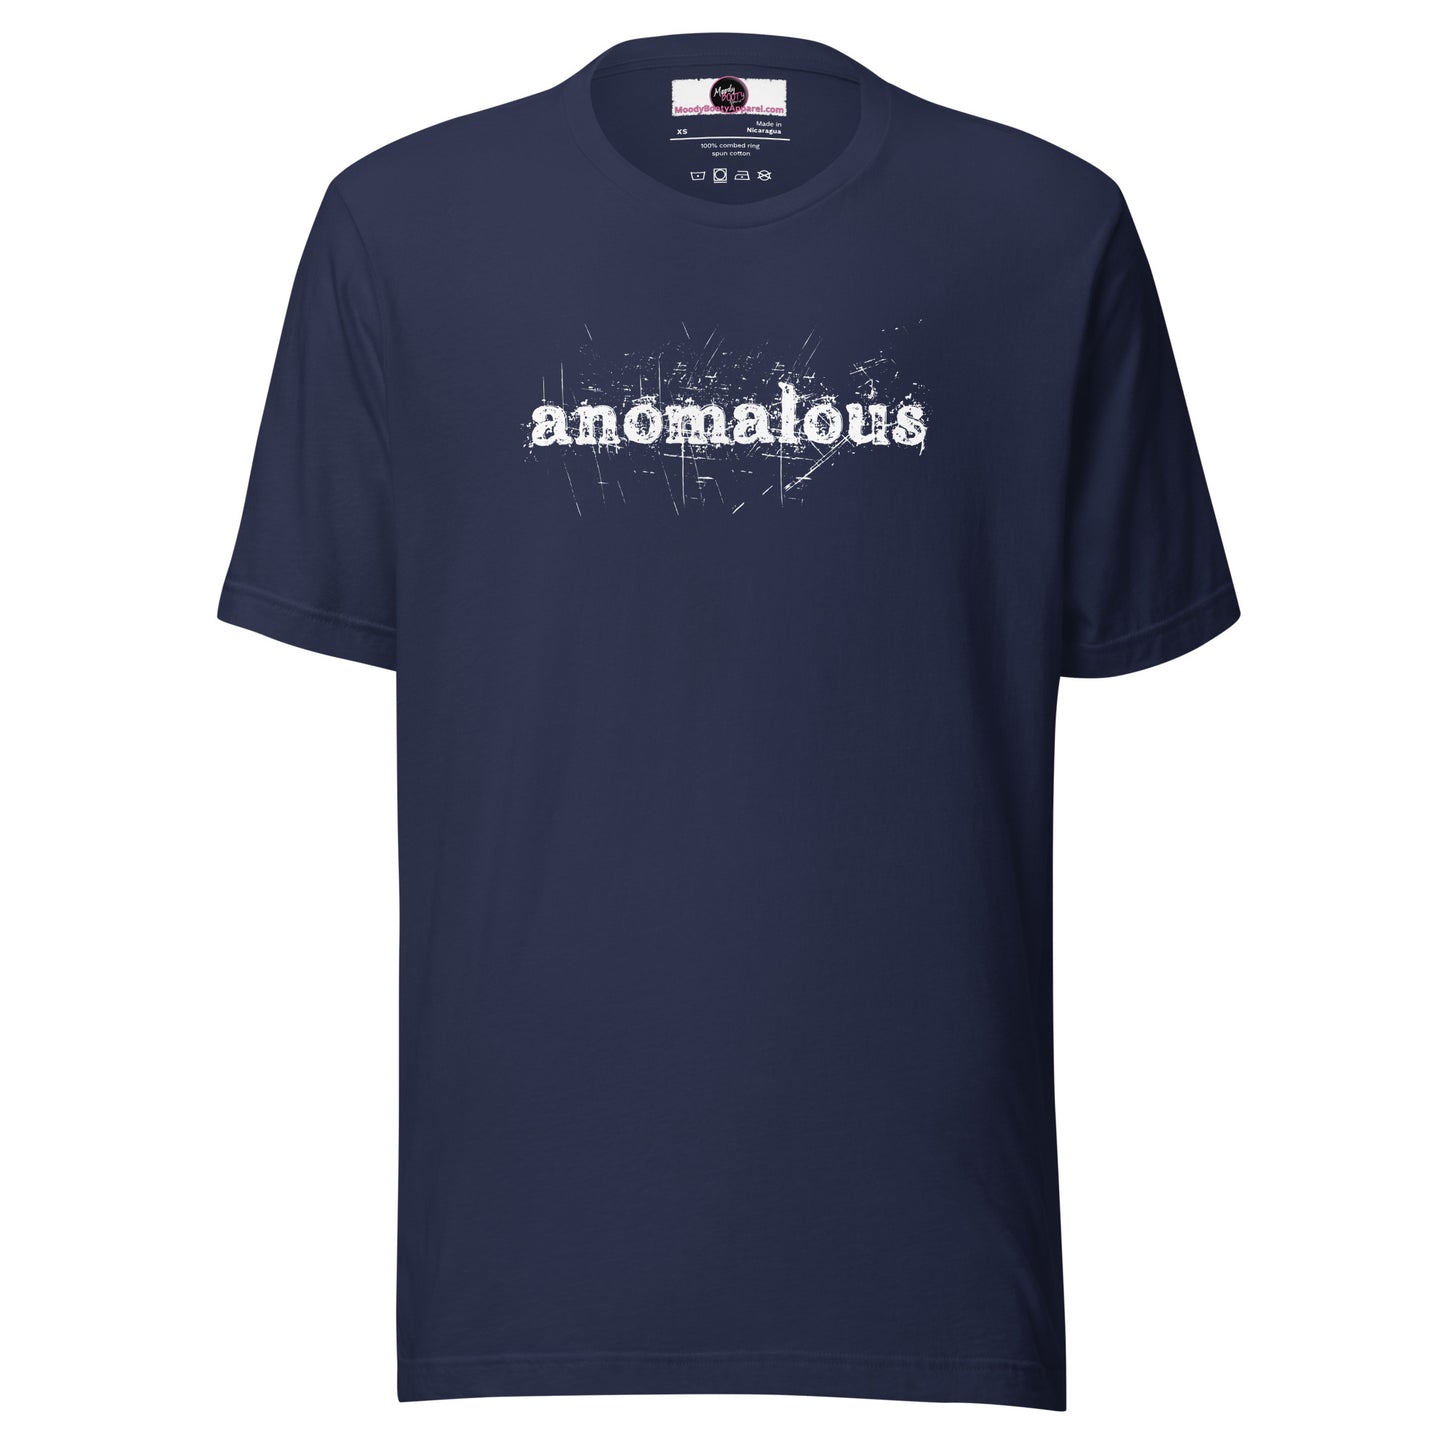 Anomalous - Unisex t-shirt